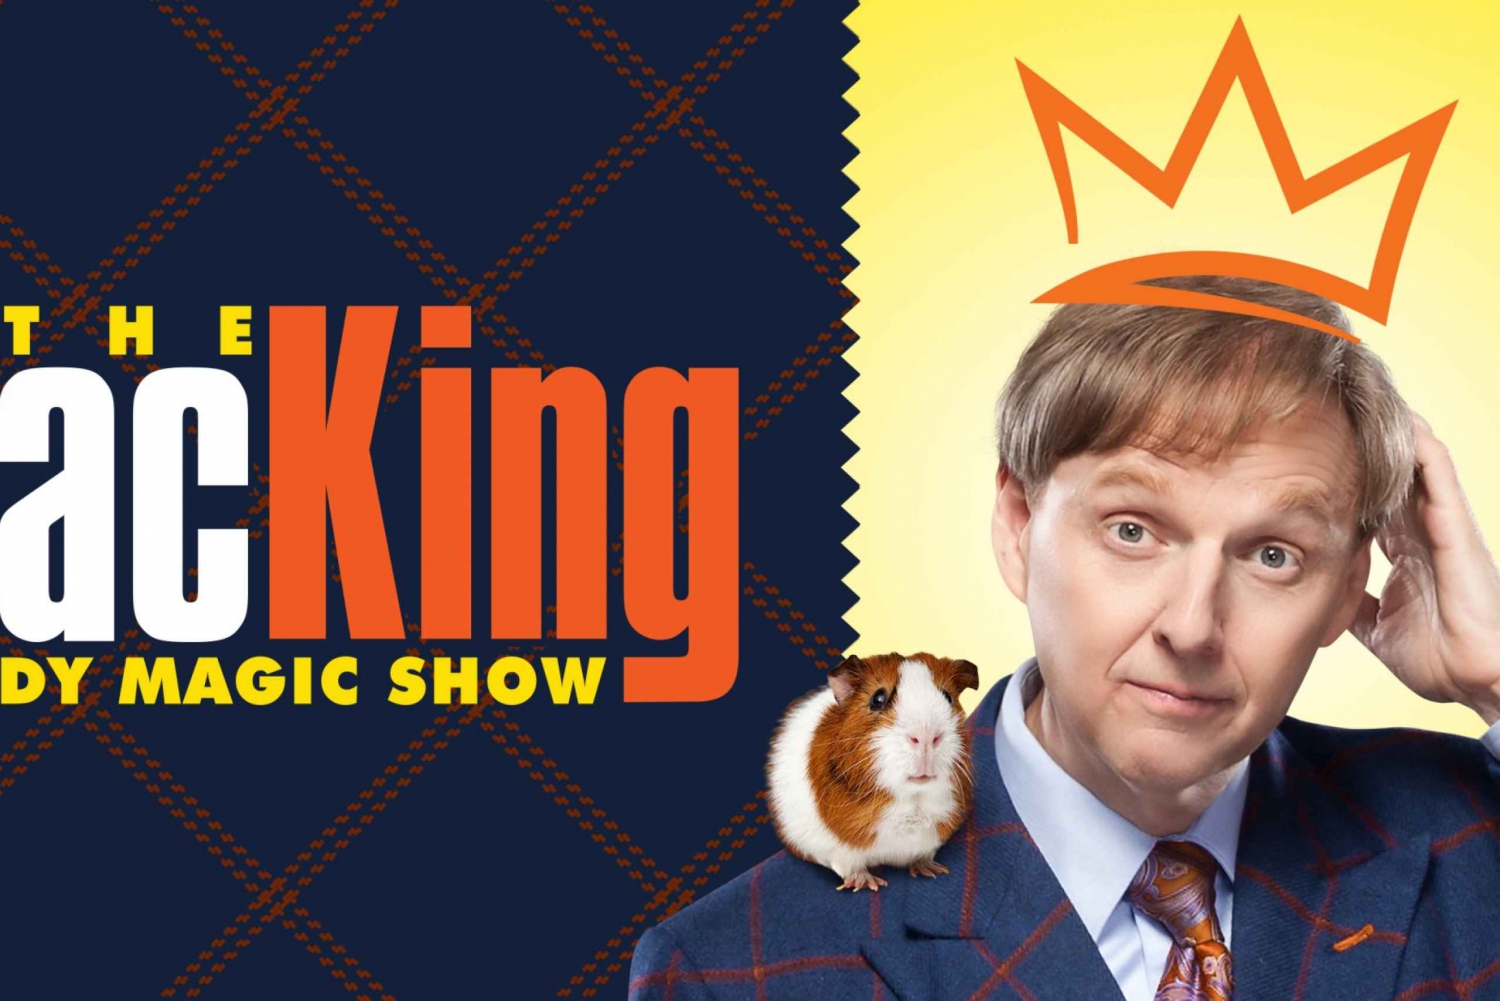 Las Vegas: Mac King Comedy Magic Show at Excalibur